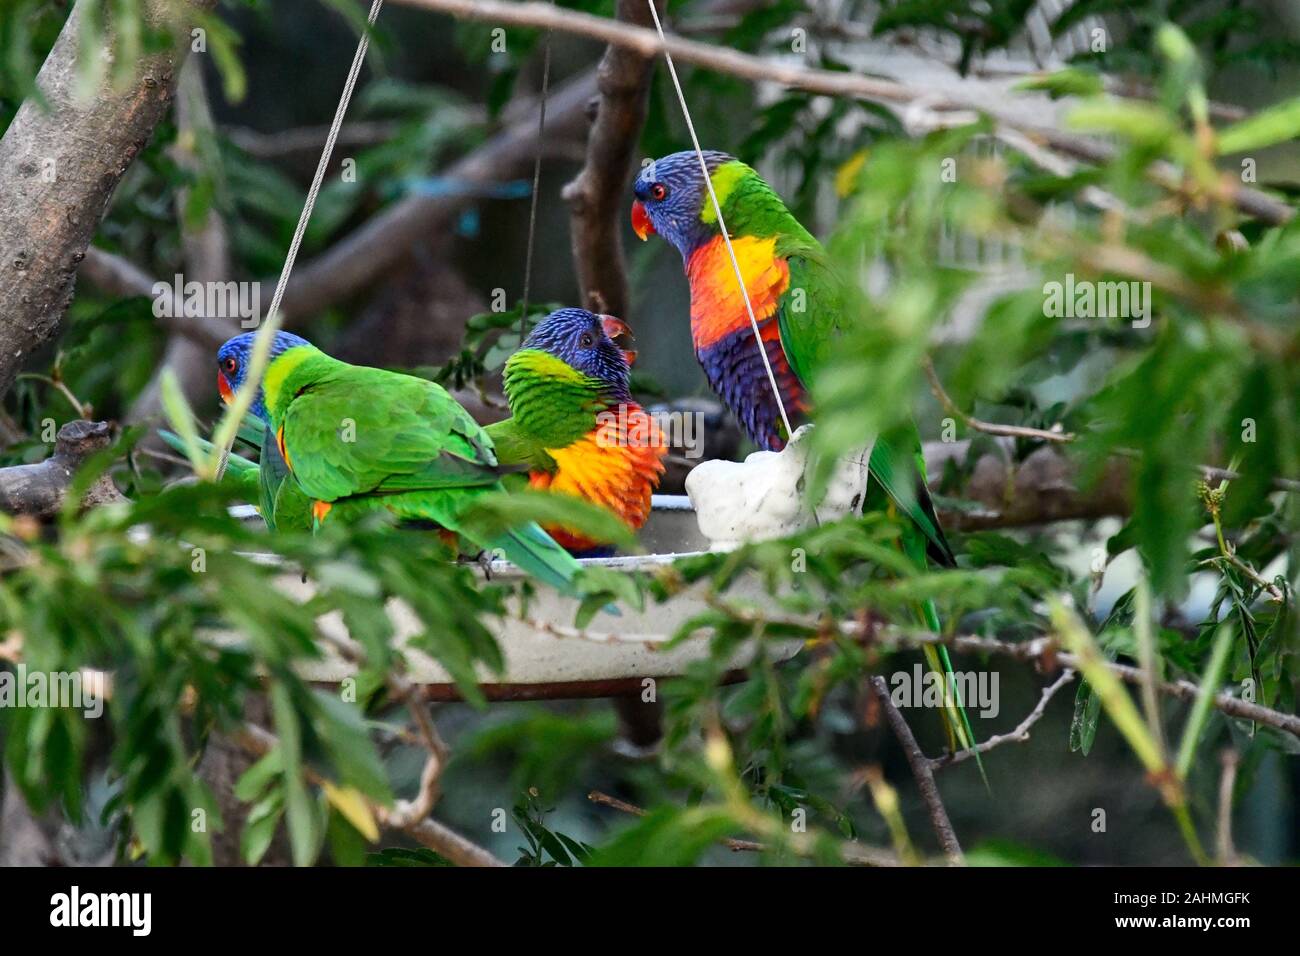 Rainbow Lorikeet Parrots, Haematodus Trichoglossus, feeding from bowl hanging in tree Stock Photo